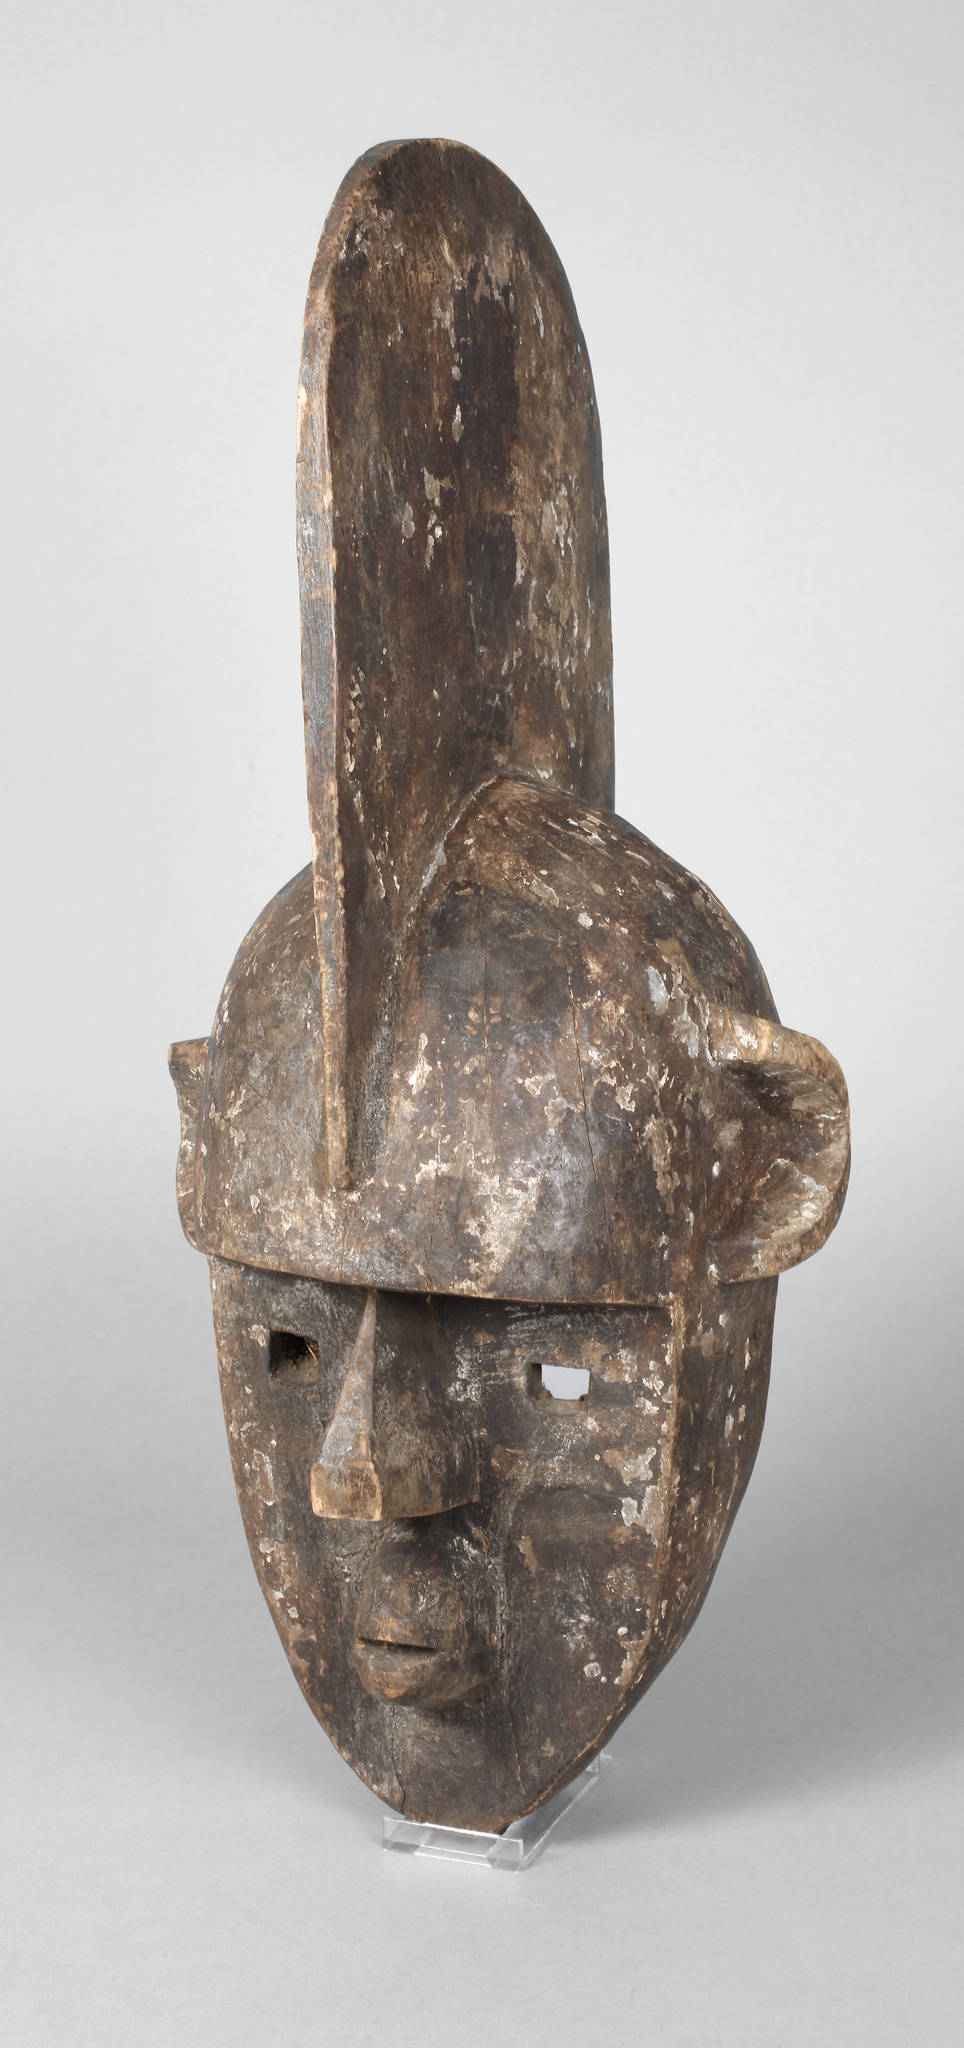 Kopfmaske Westafrika